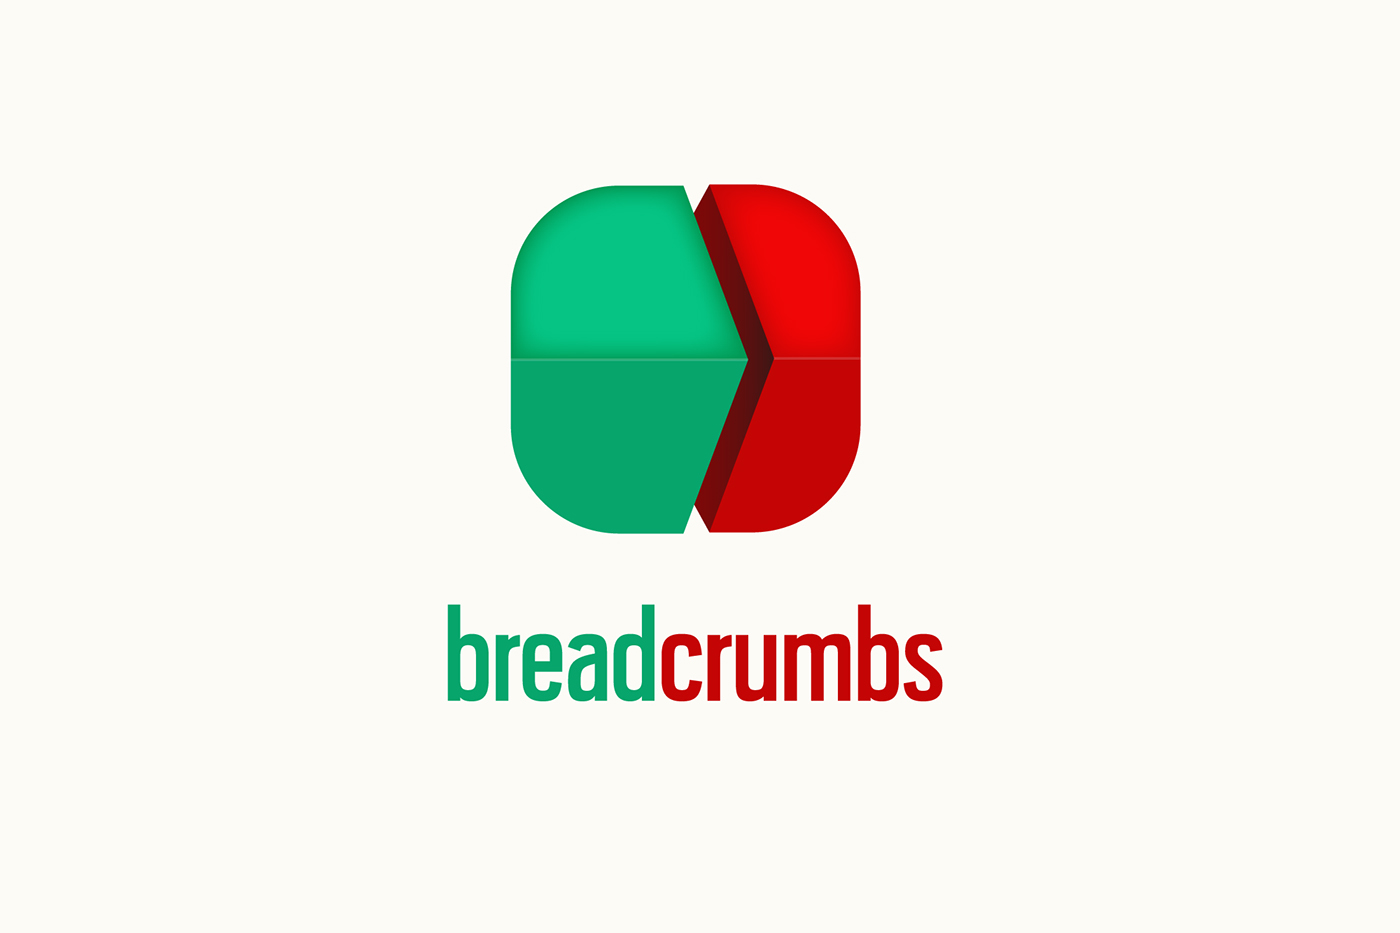 recipe application kitchen Guide iphone app bread crumbs breadcrumbs cooking design smartphone store